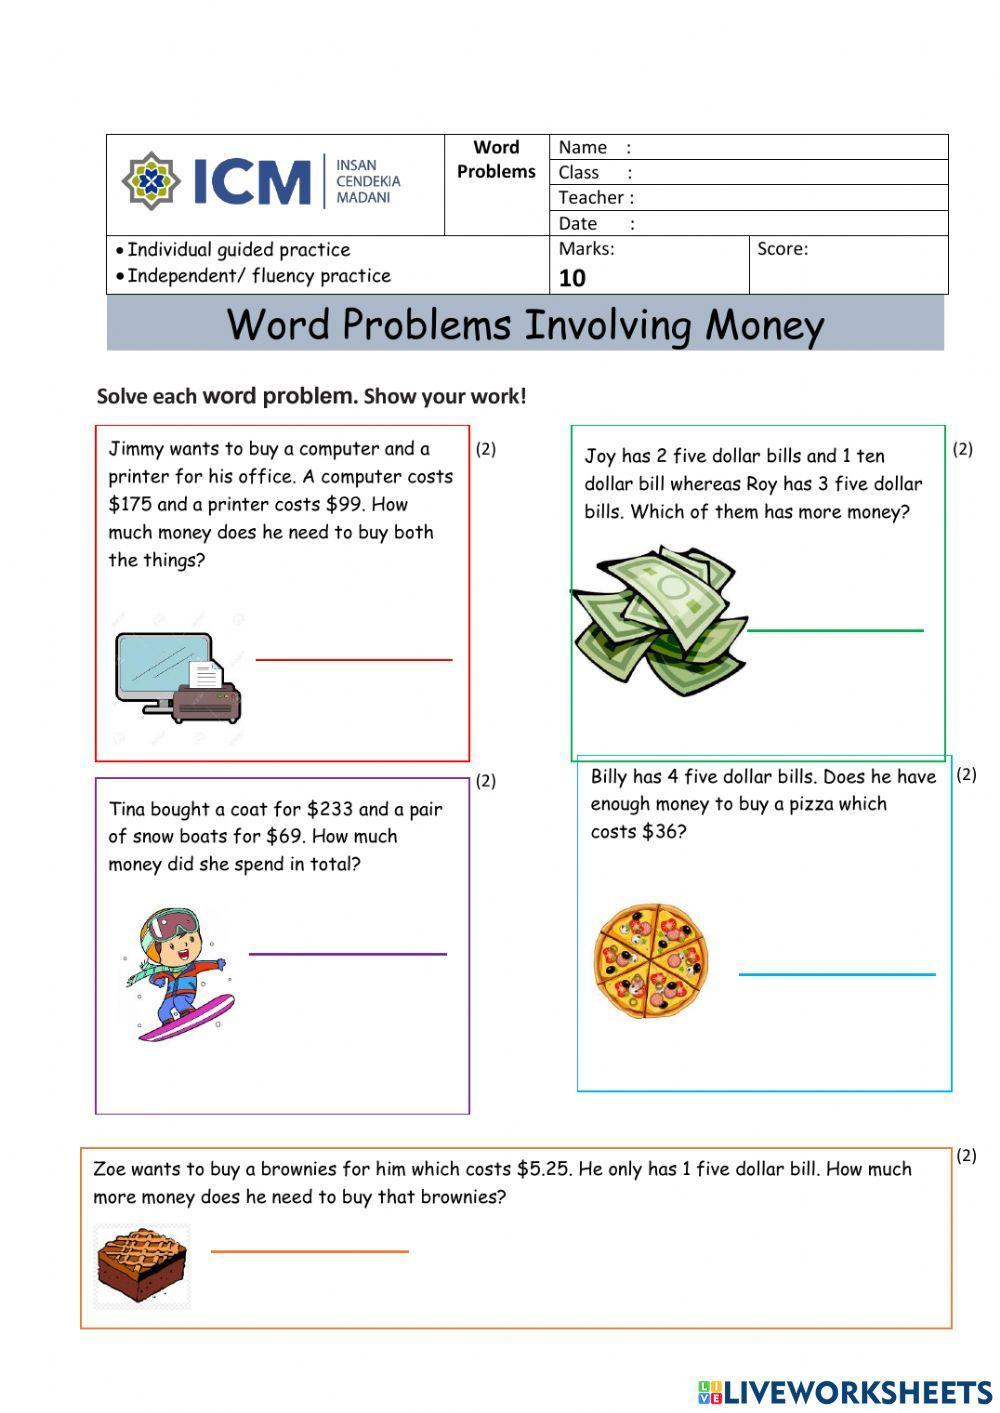 Solving word problems involving money